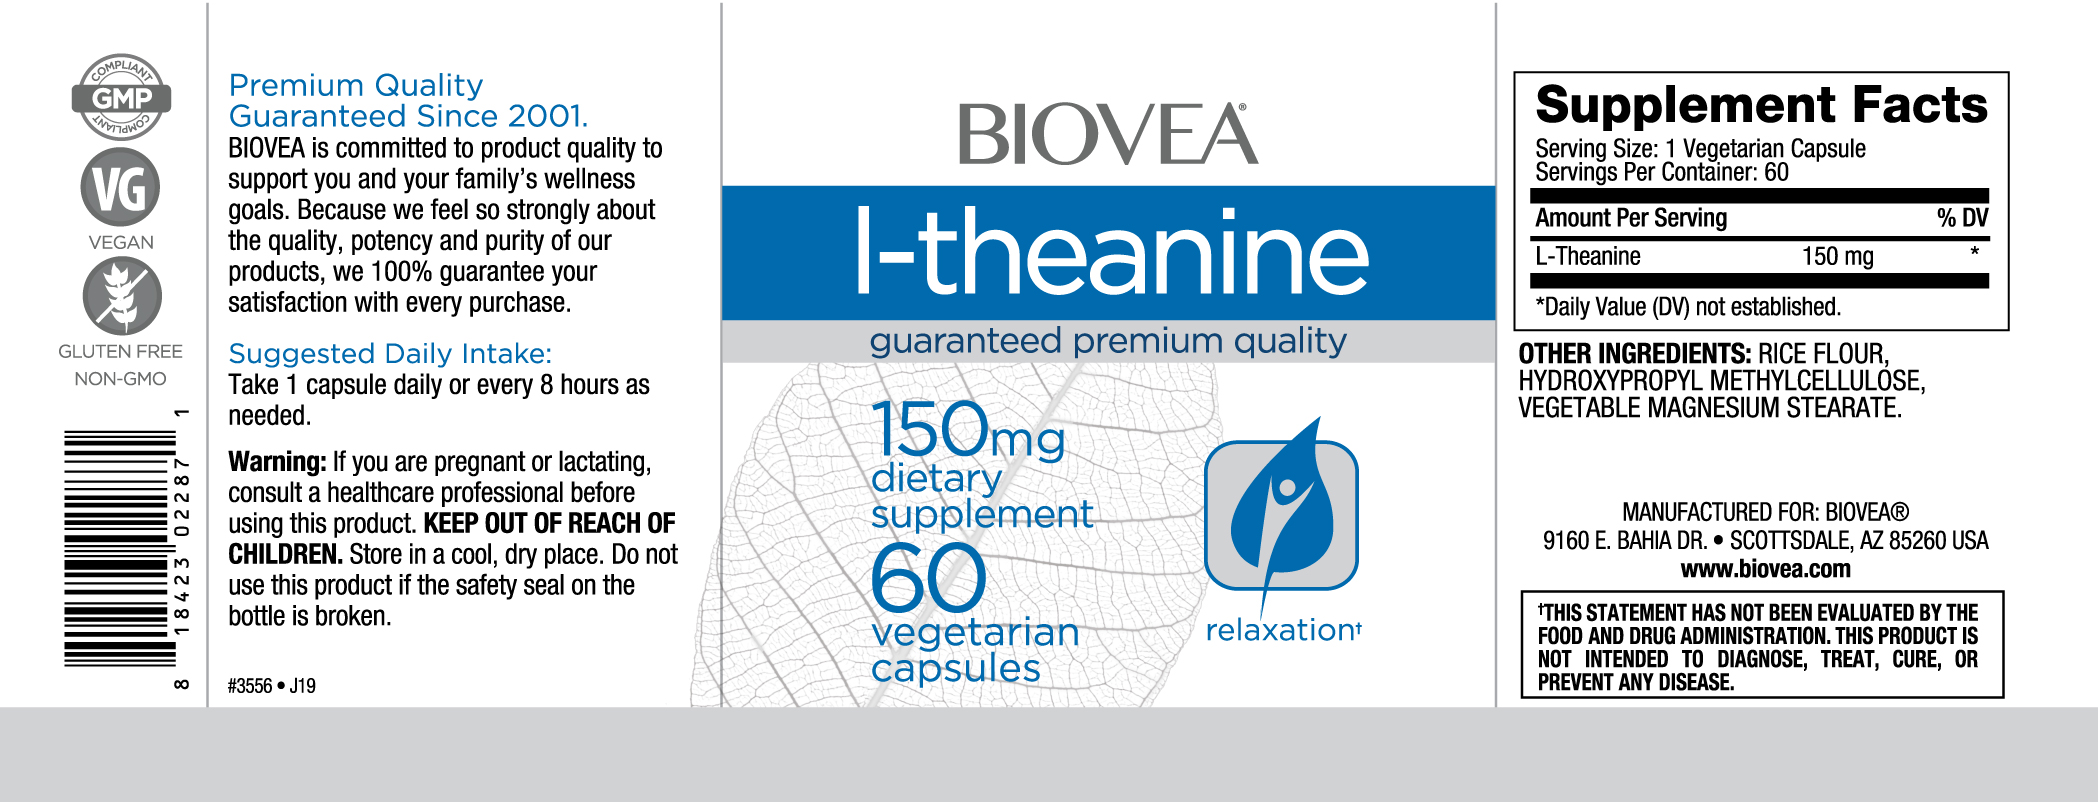 BIOVEA  L-THEANINE 150 mg / 60 Vegetarian Capsules